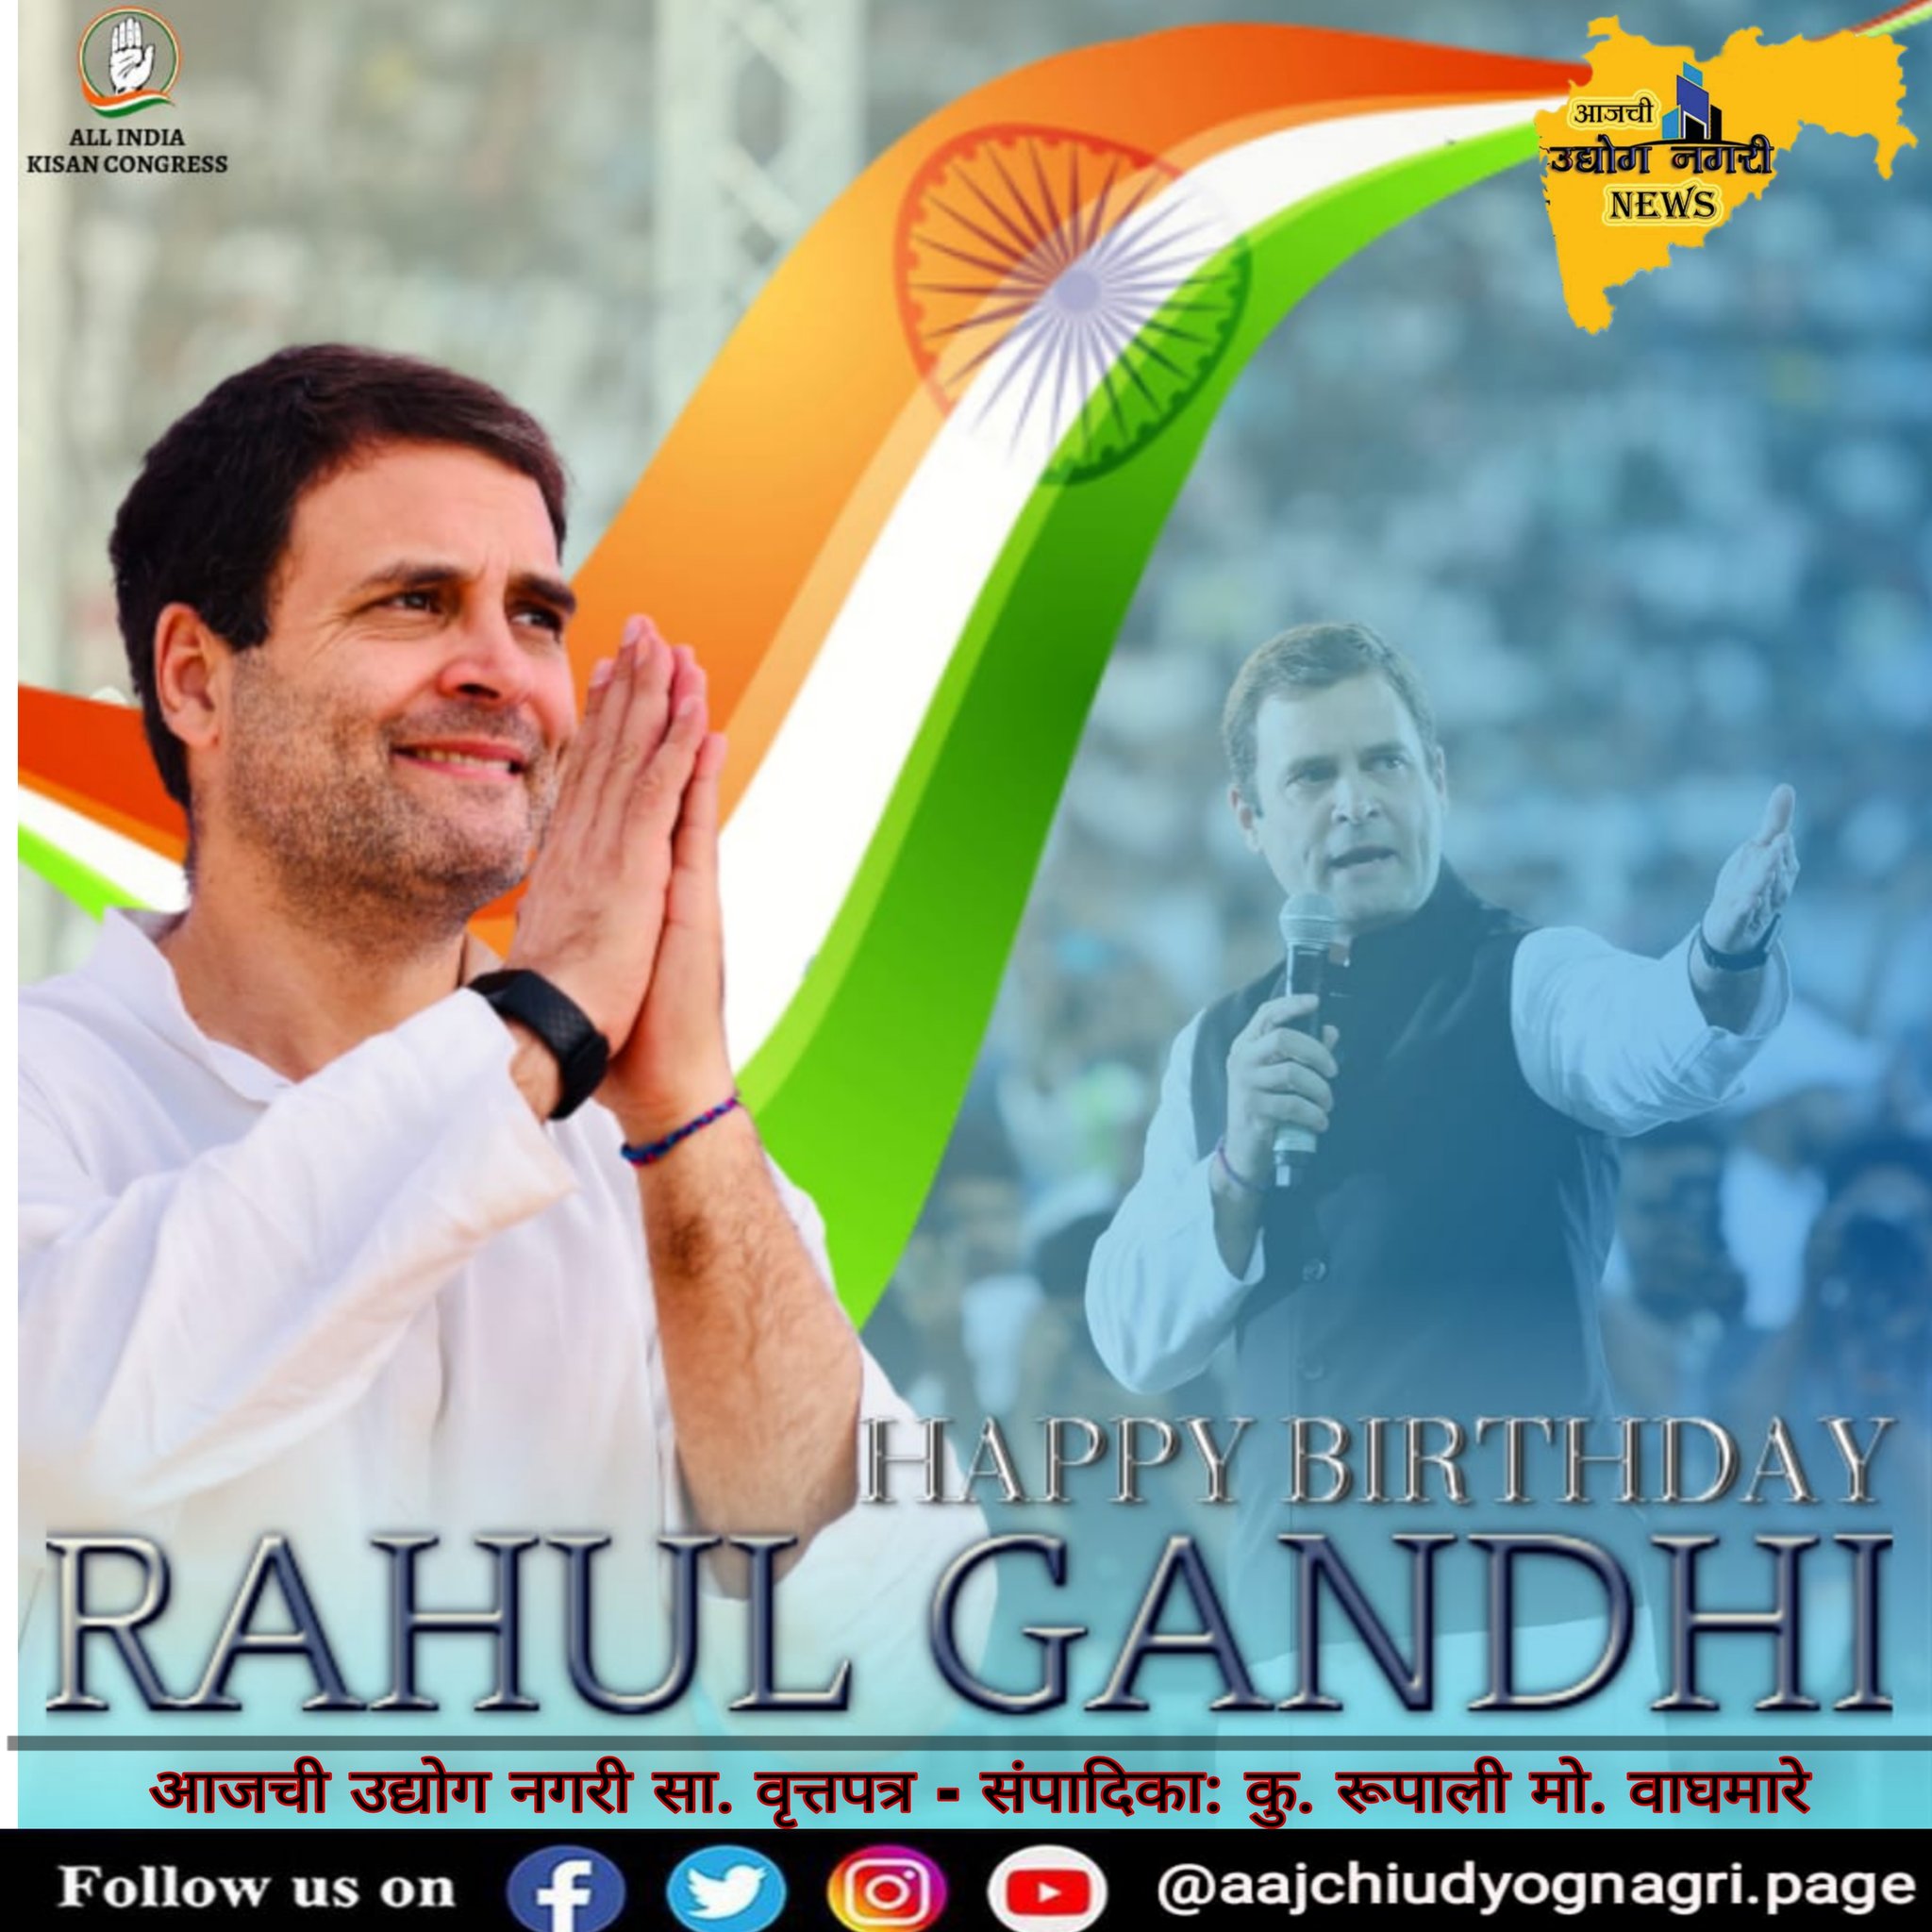 Happy Birthday Rahul Gandhi sir.. God bless you   